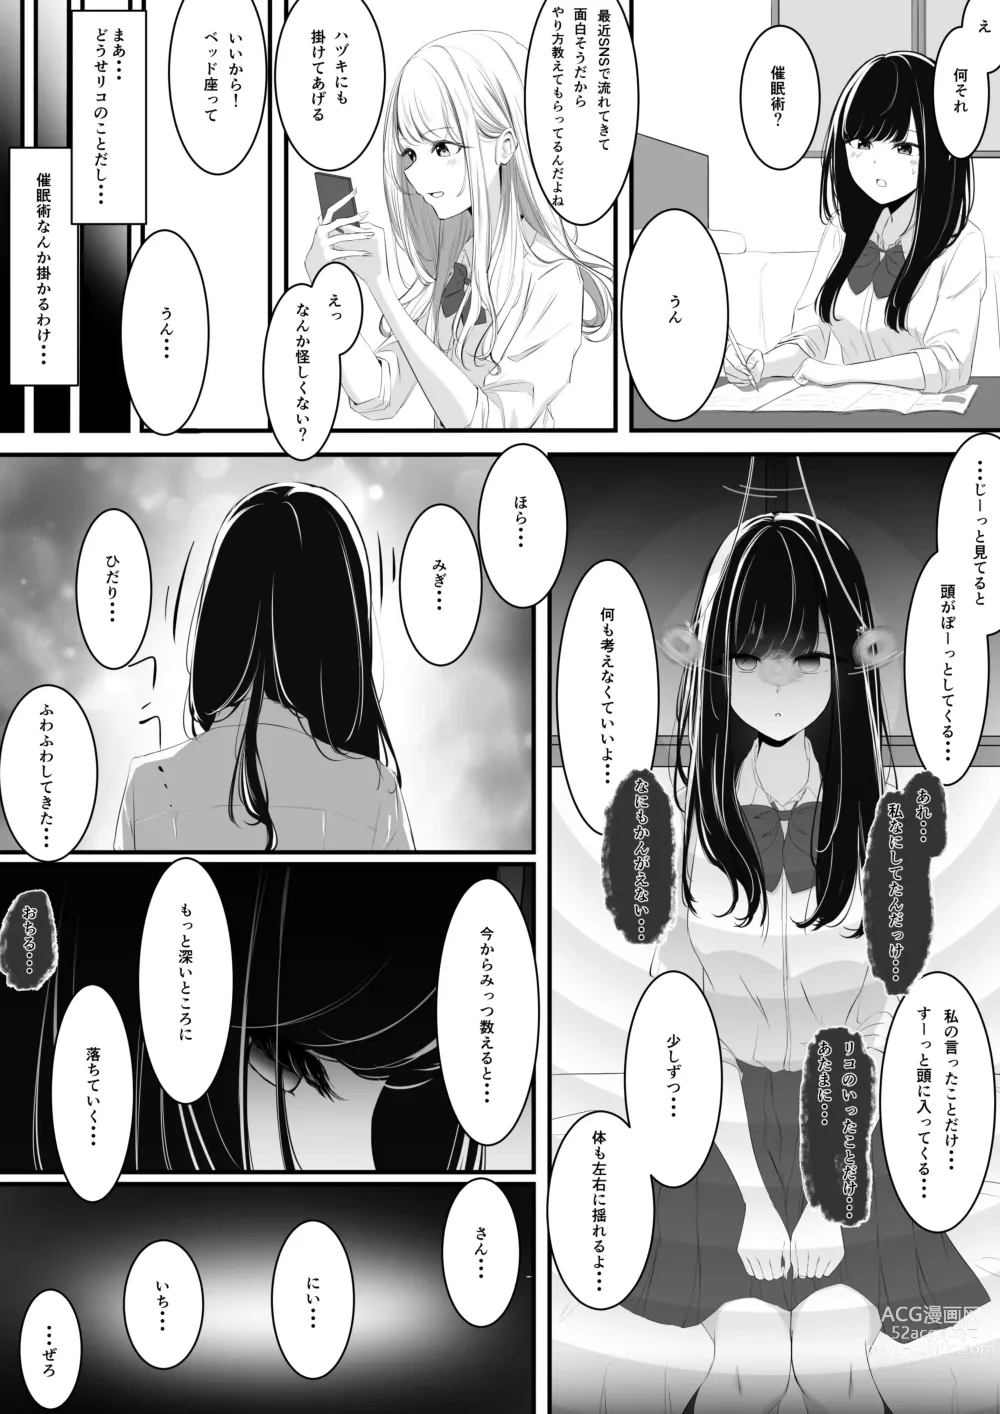 Page 2 of doujinshi Yuri comic Part 1,2 and 3.